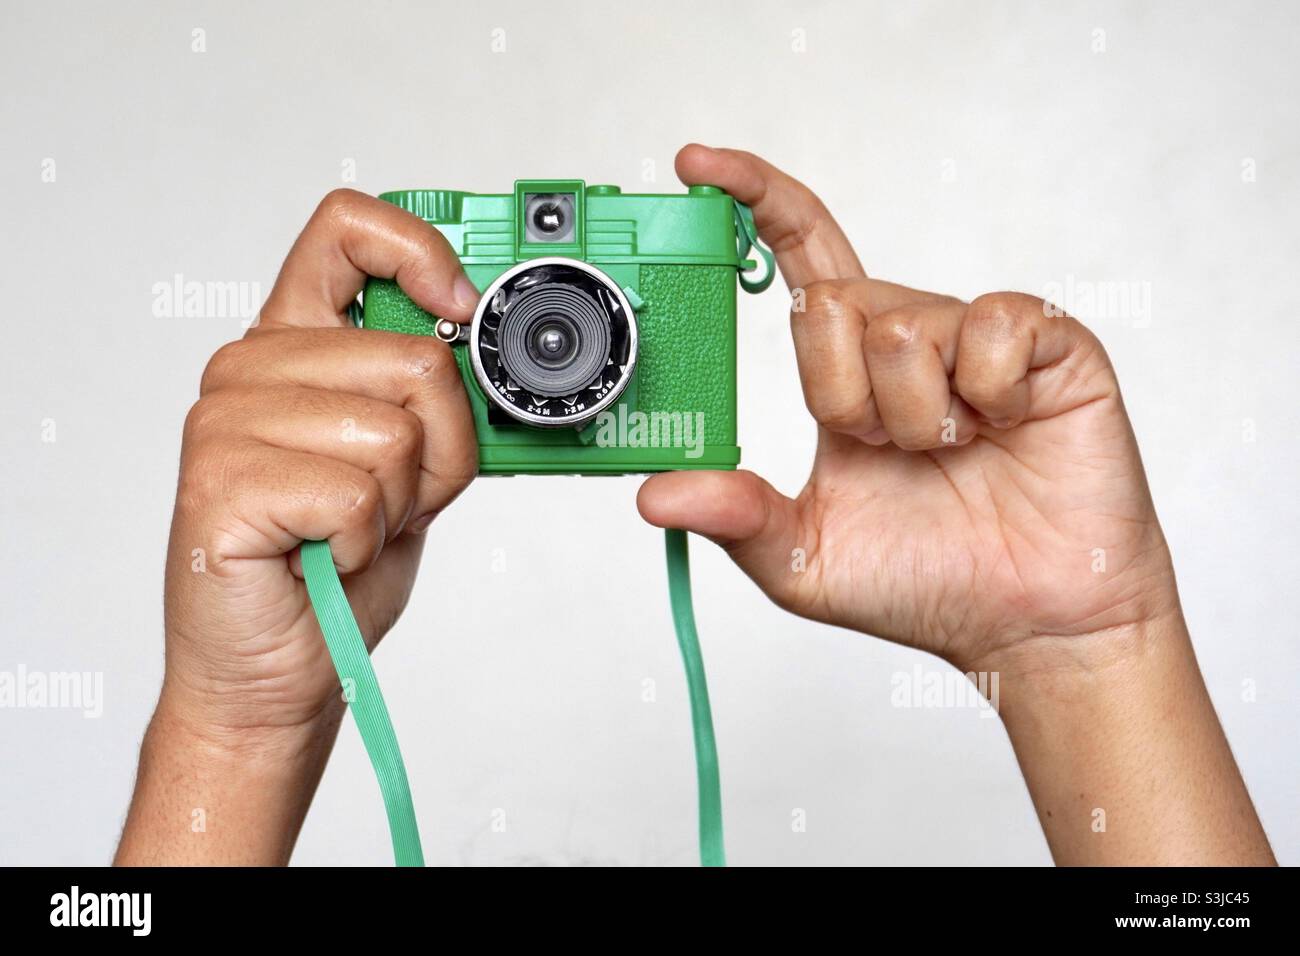 Photographer using a green analog camera Stock Photo